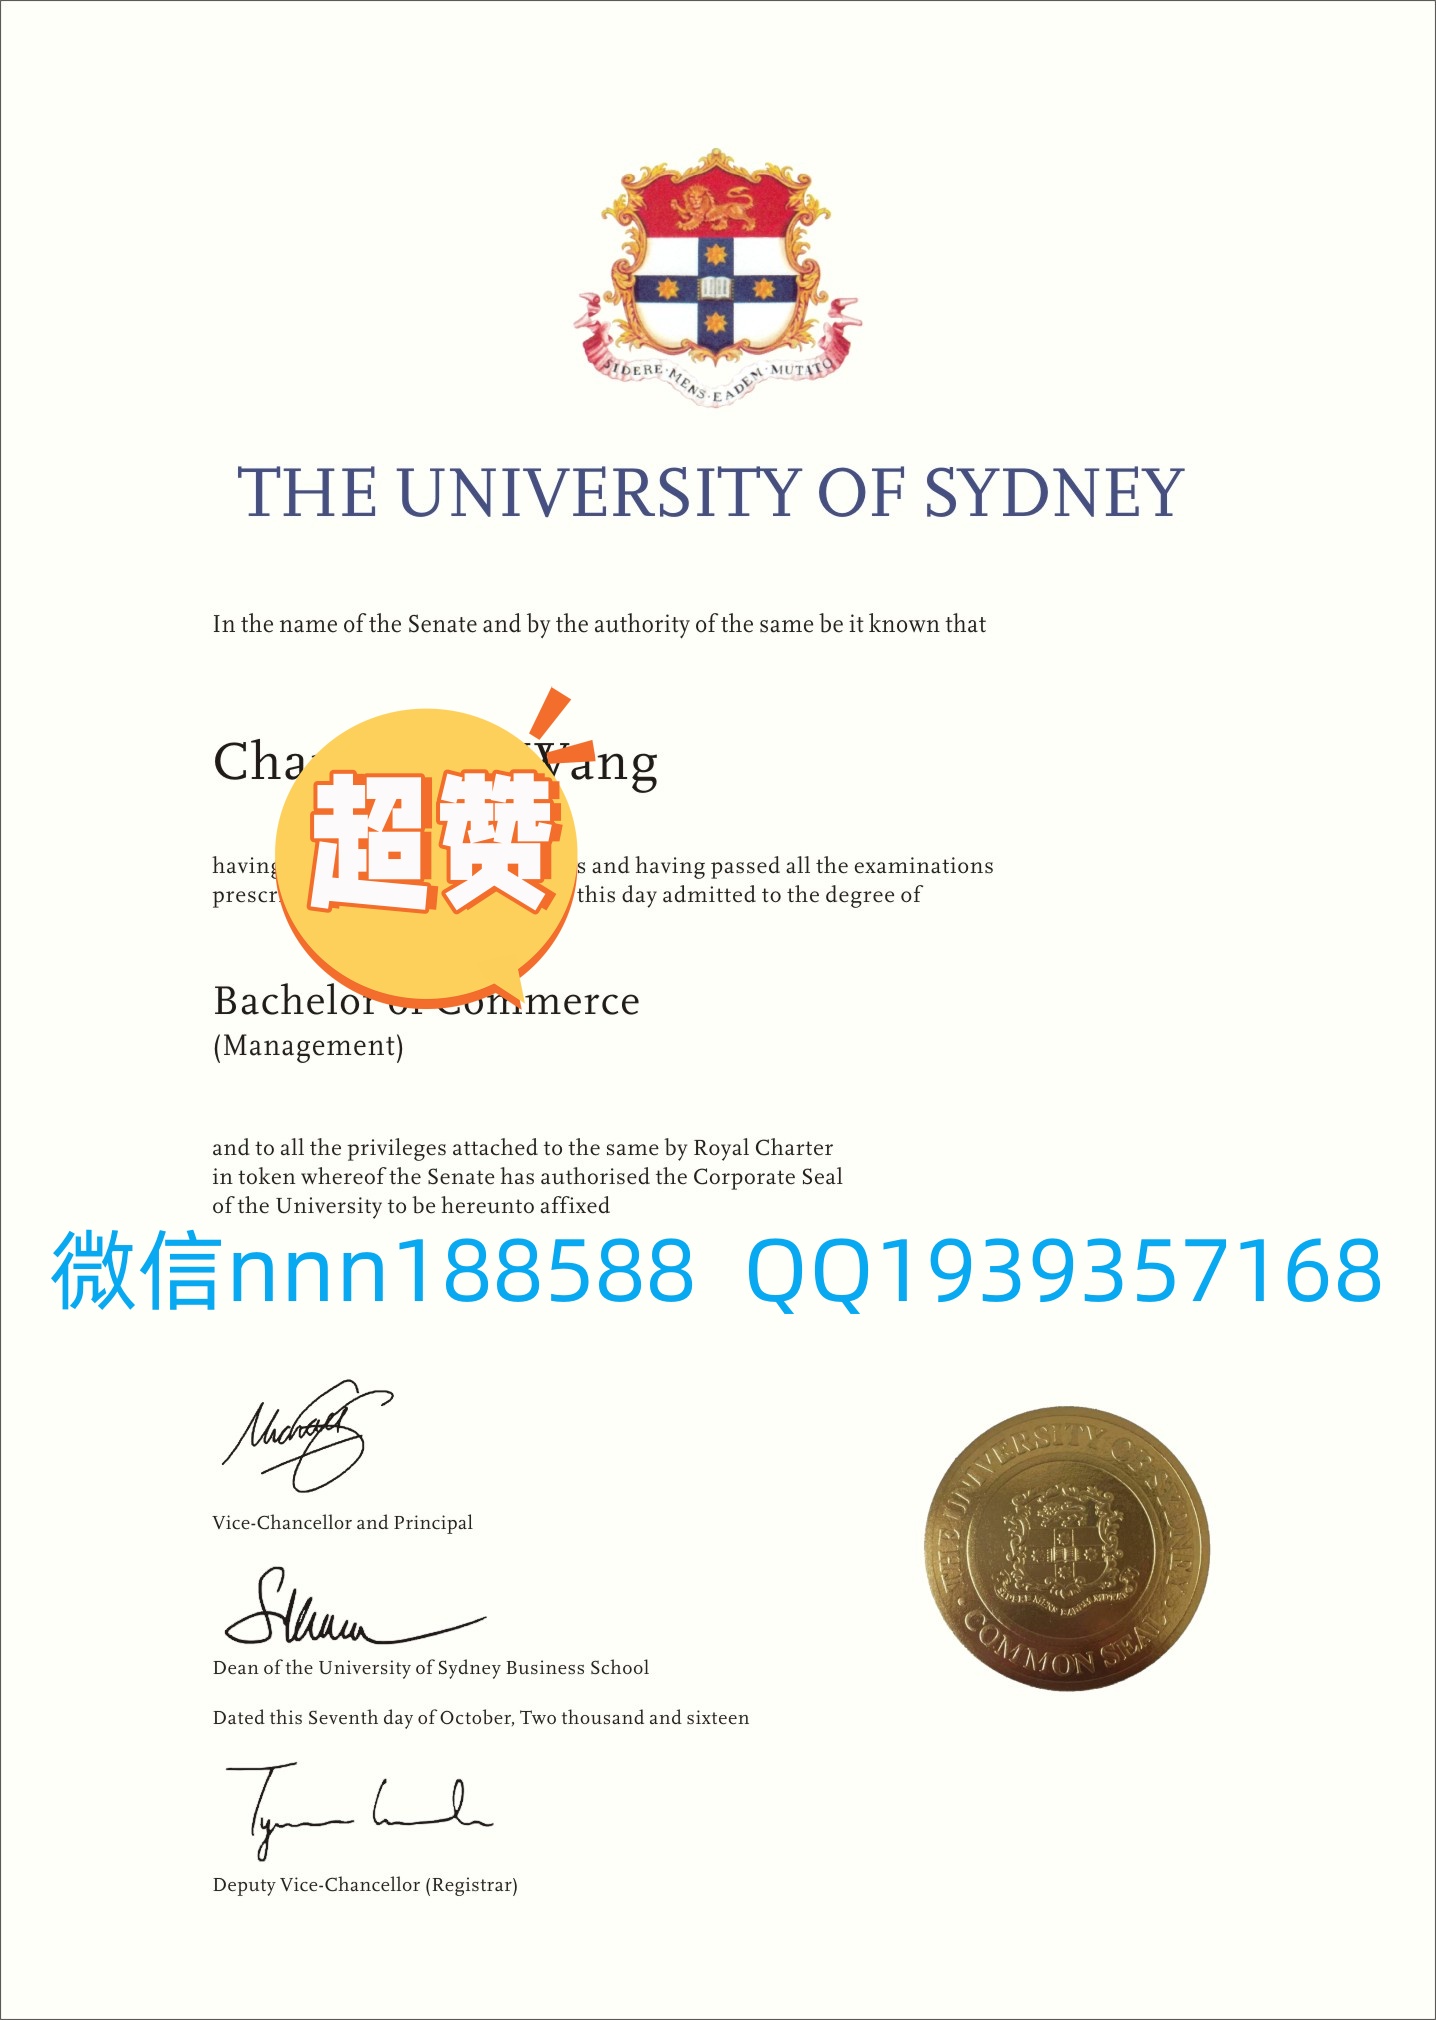 Graduation from the University of Sydney